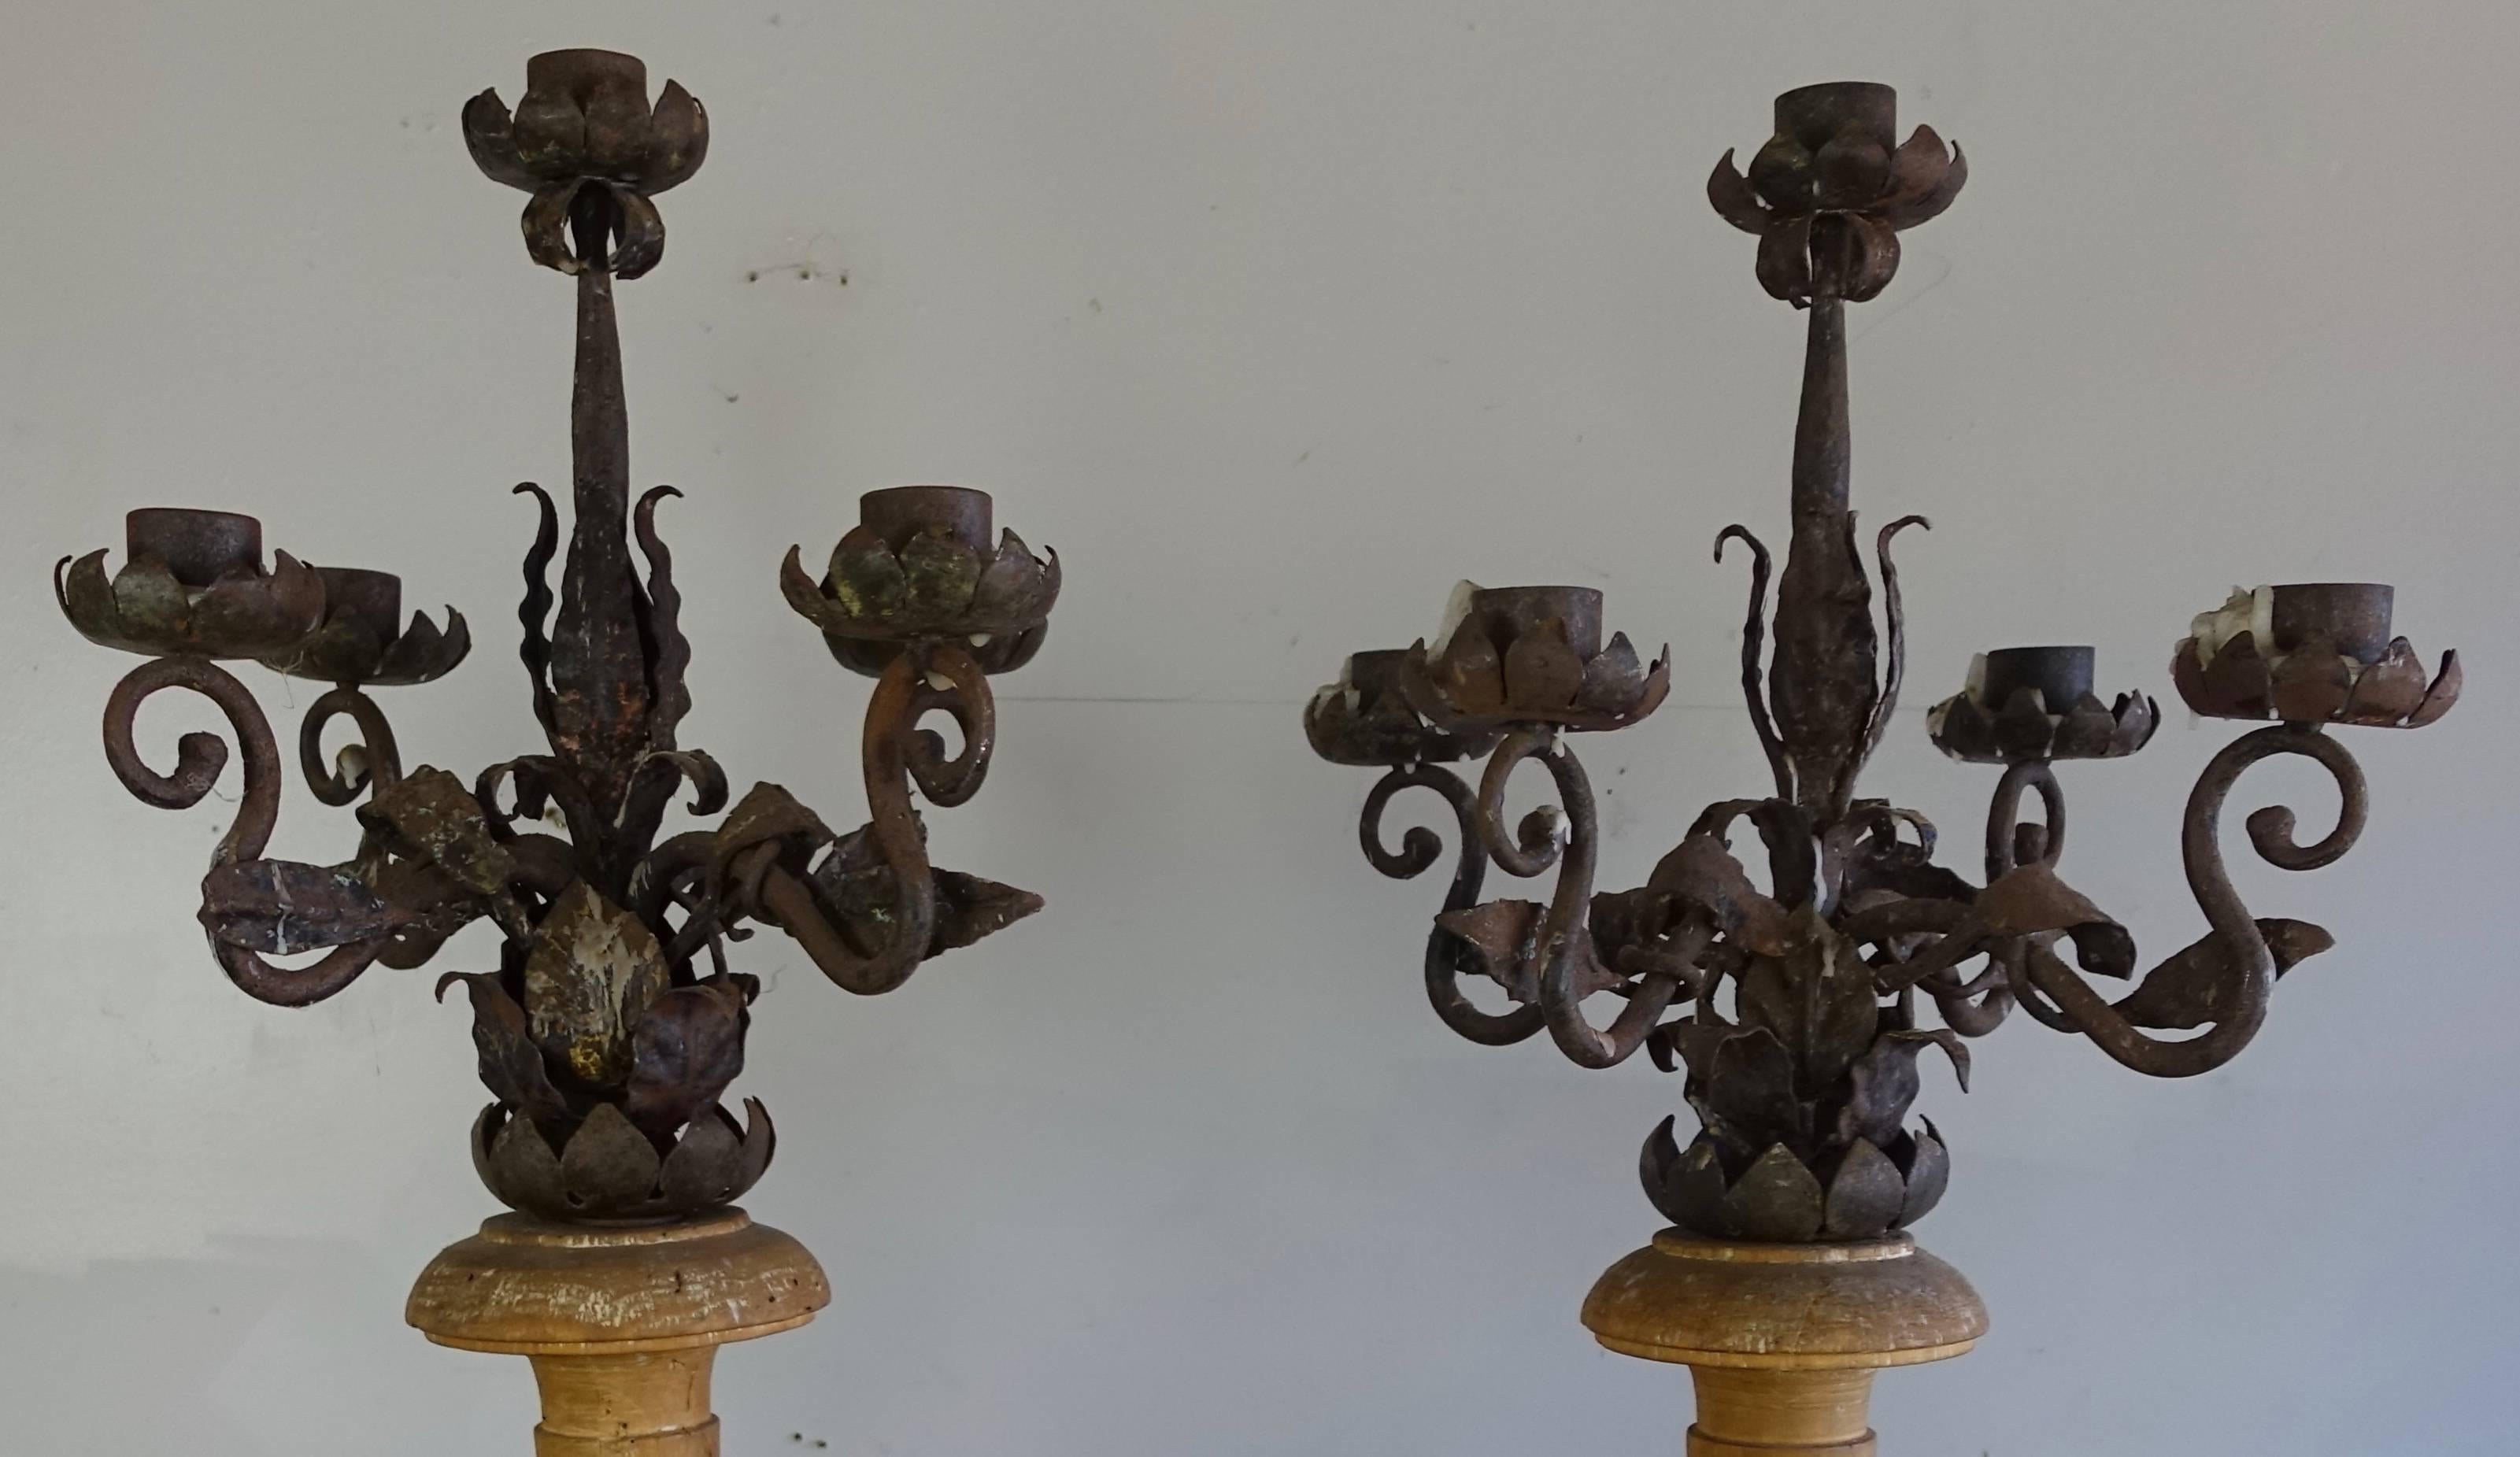 Baroque 19th Century Italian Walnut and Wrought Iron Candelabras, Pair